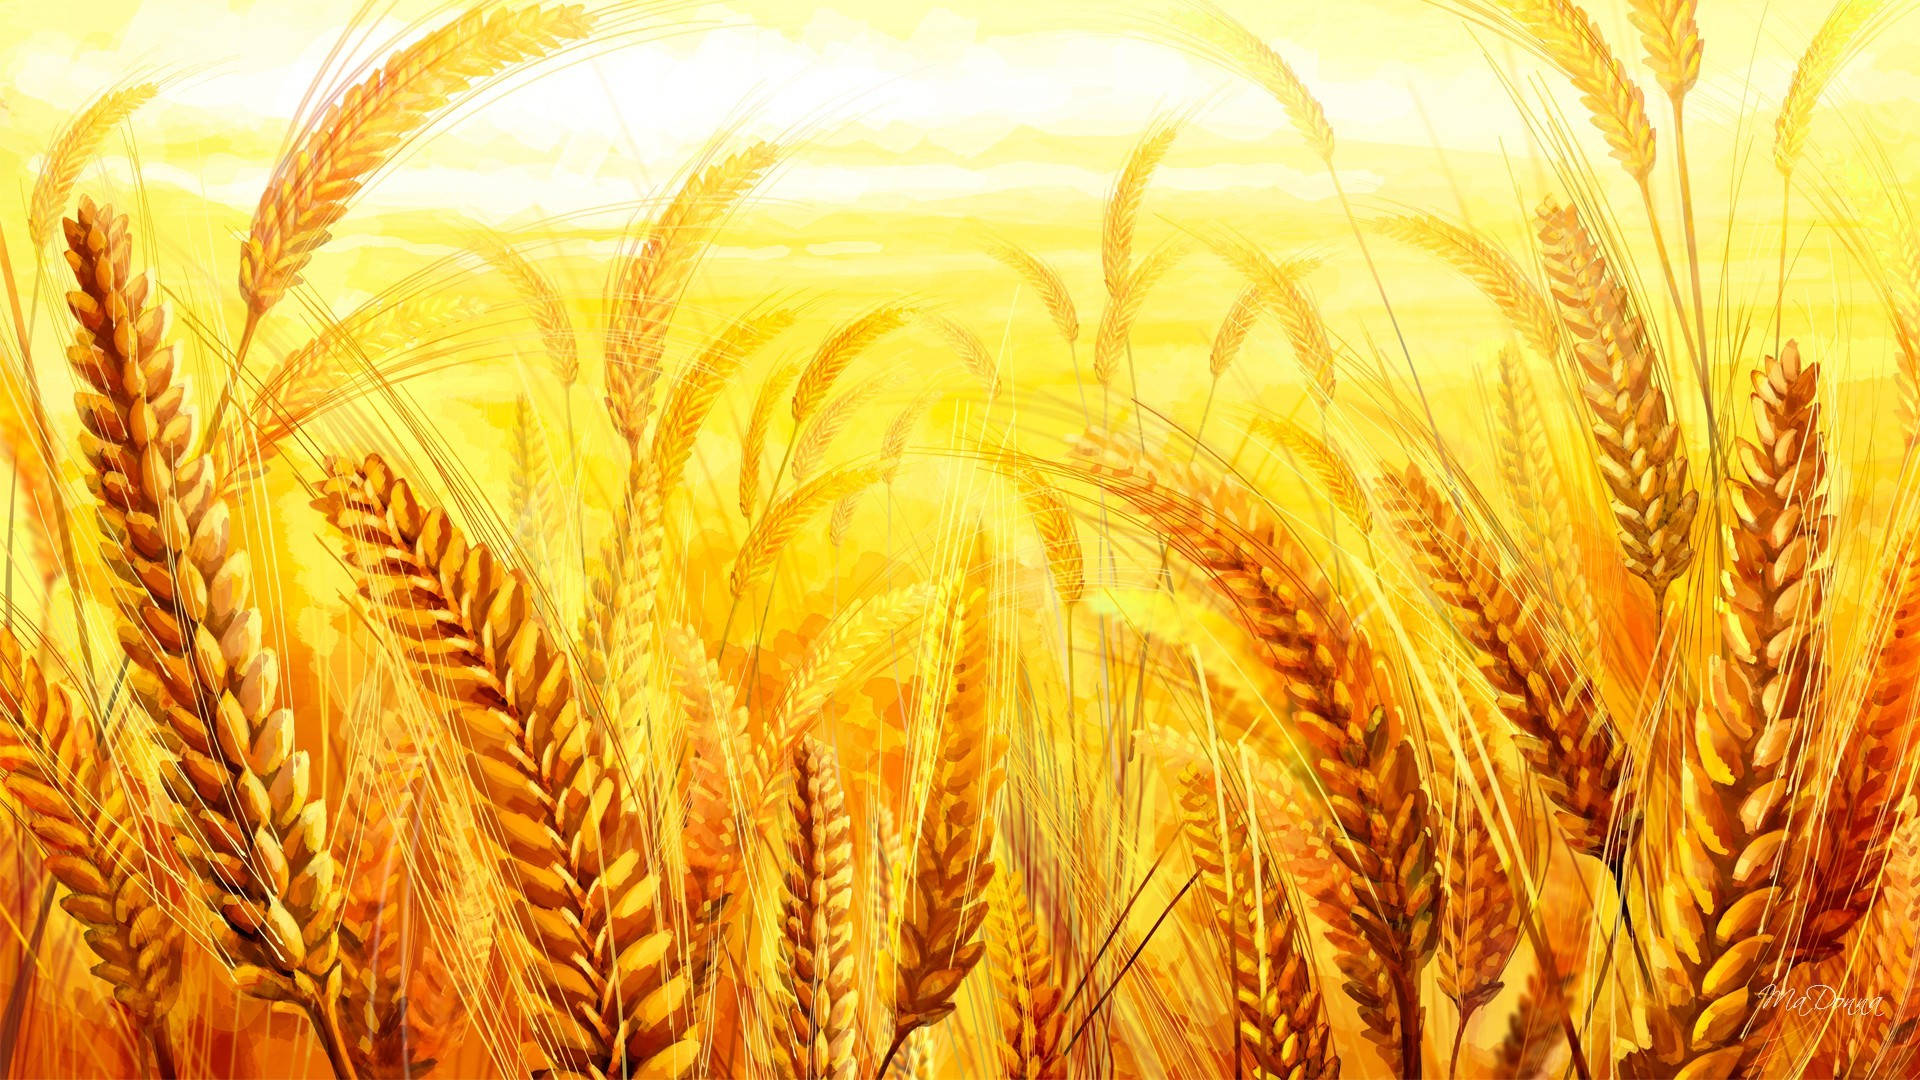 Wheat Field Painting Wallpaper